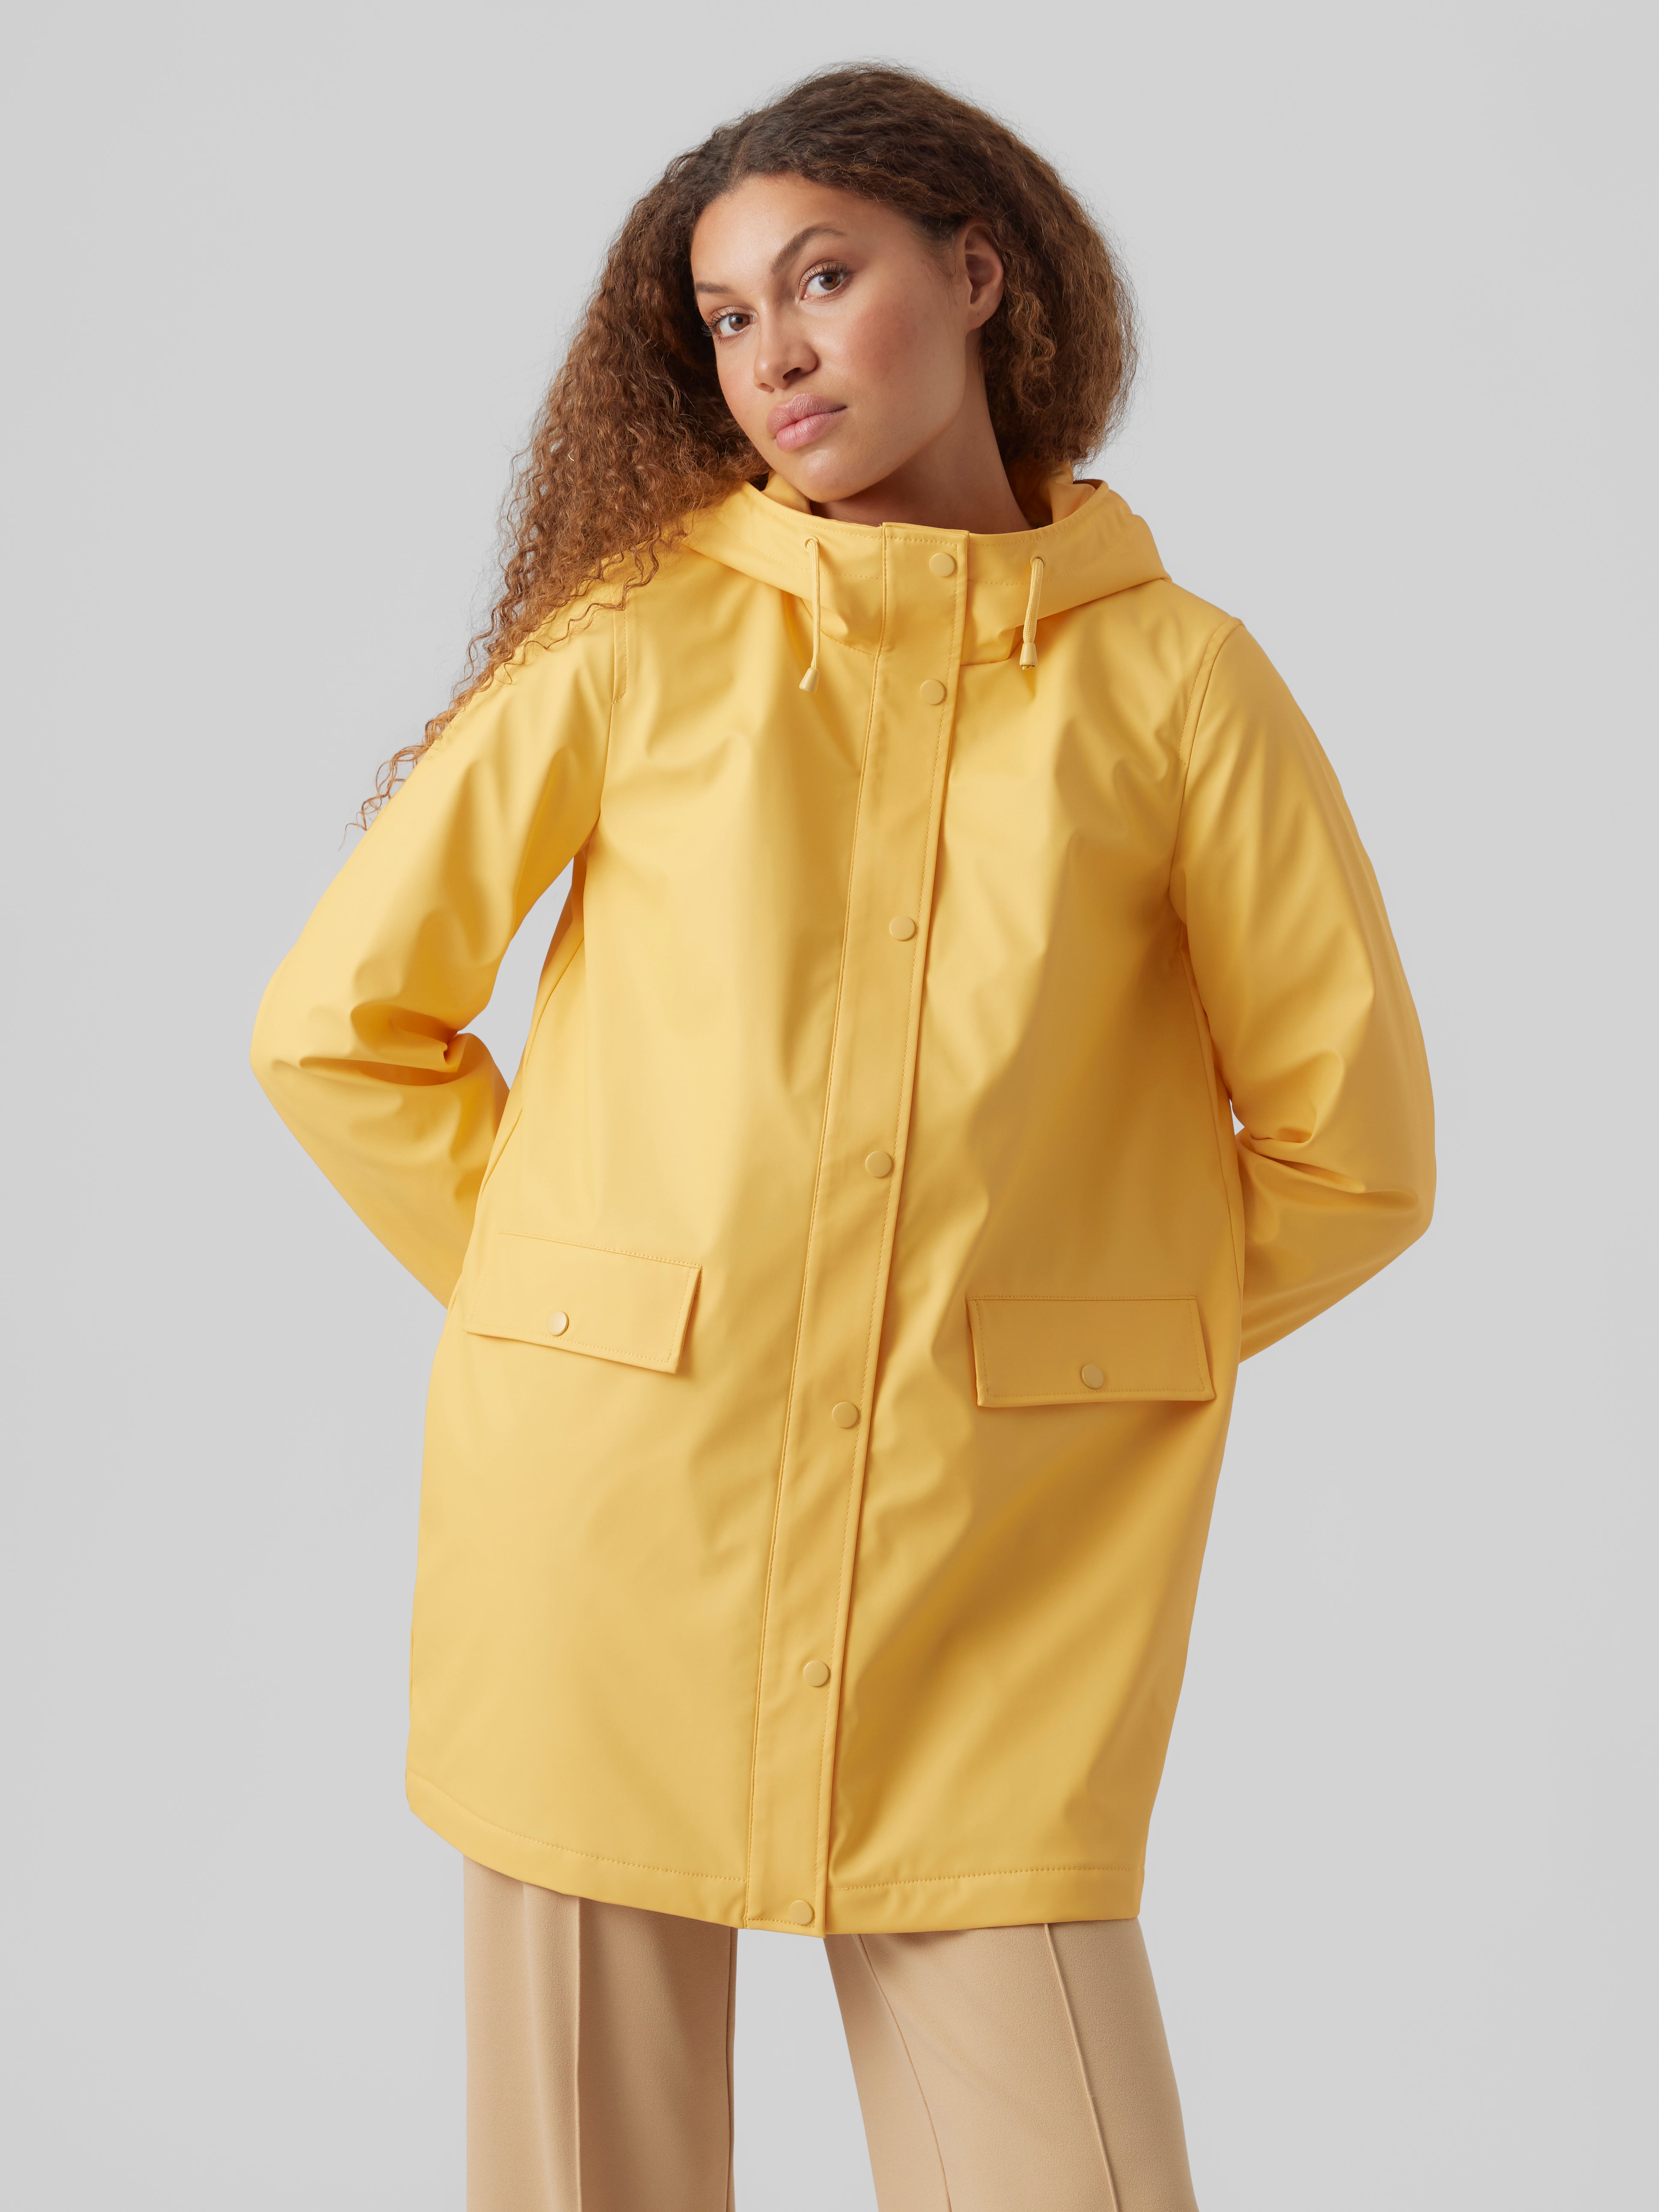 Women's Yellow Rain Jackets Raincoats Nordstrom, 59% OFF